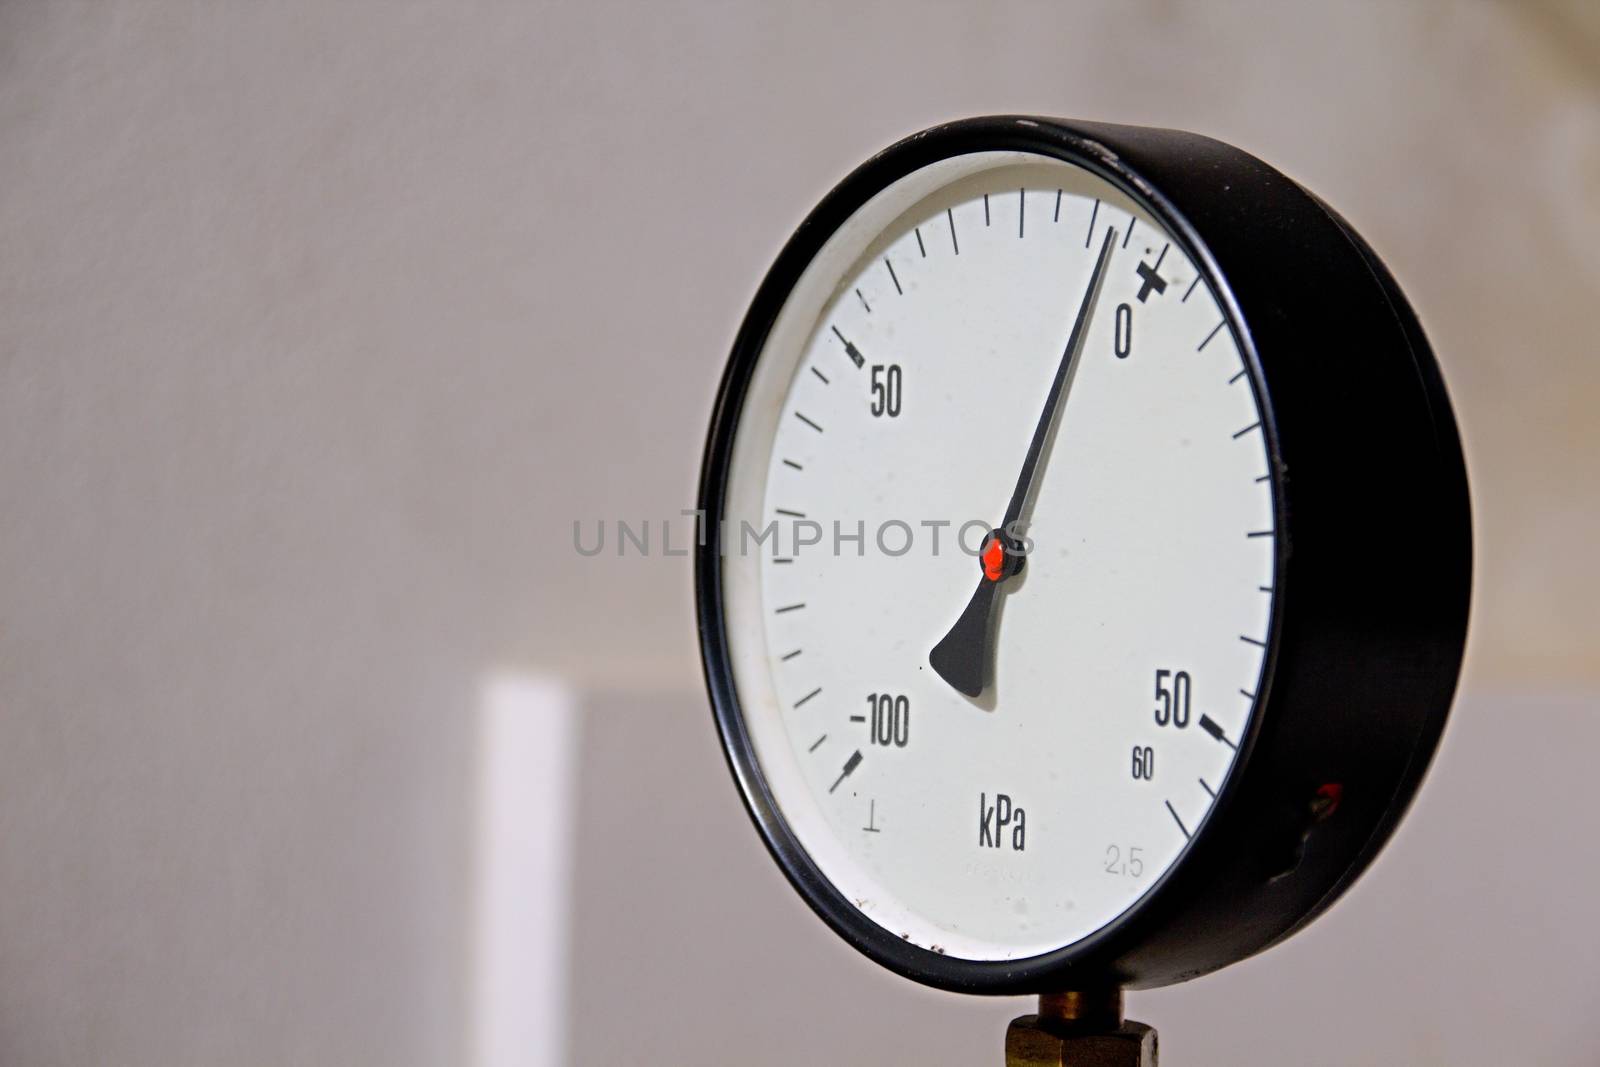 Industry meter by Dermot68